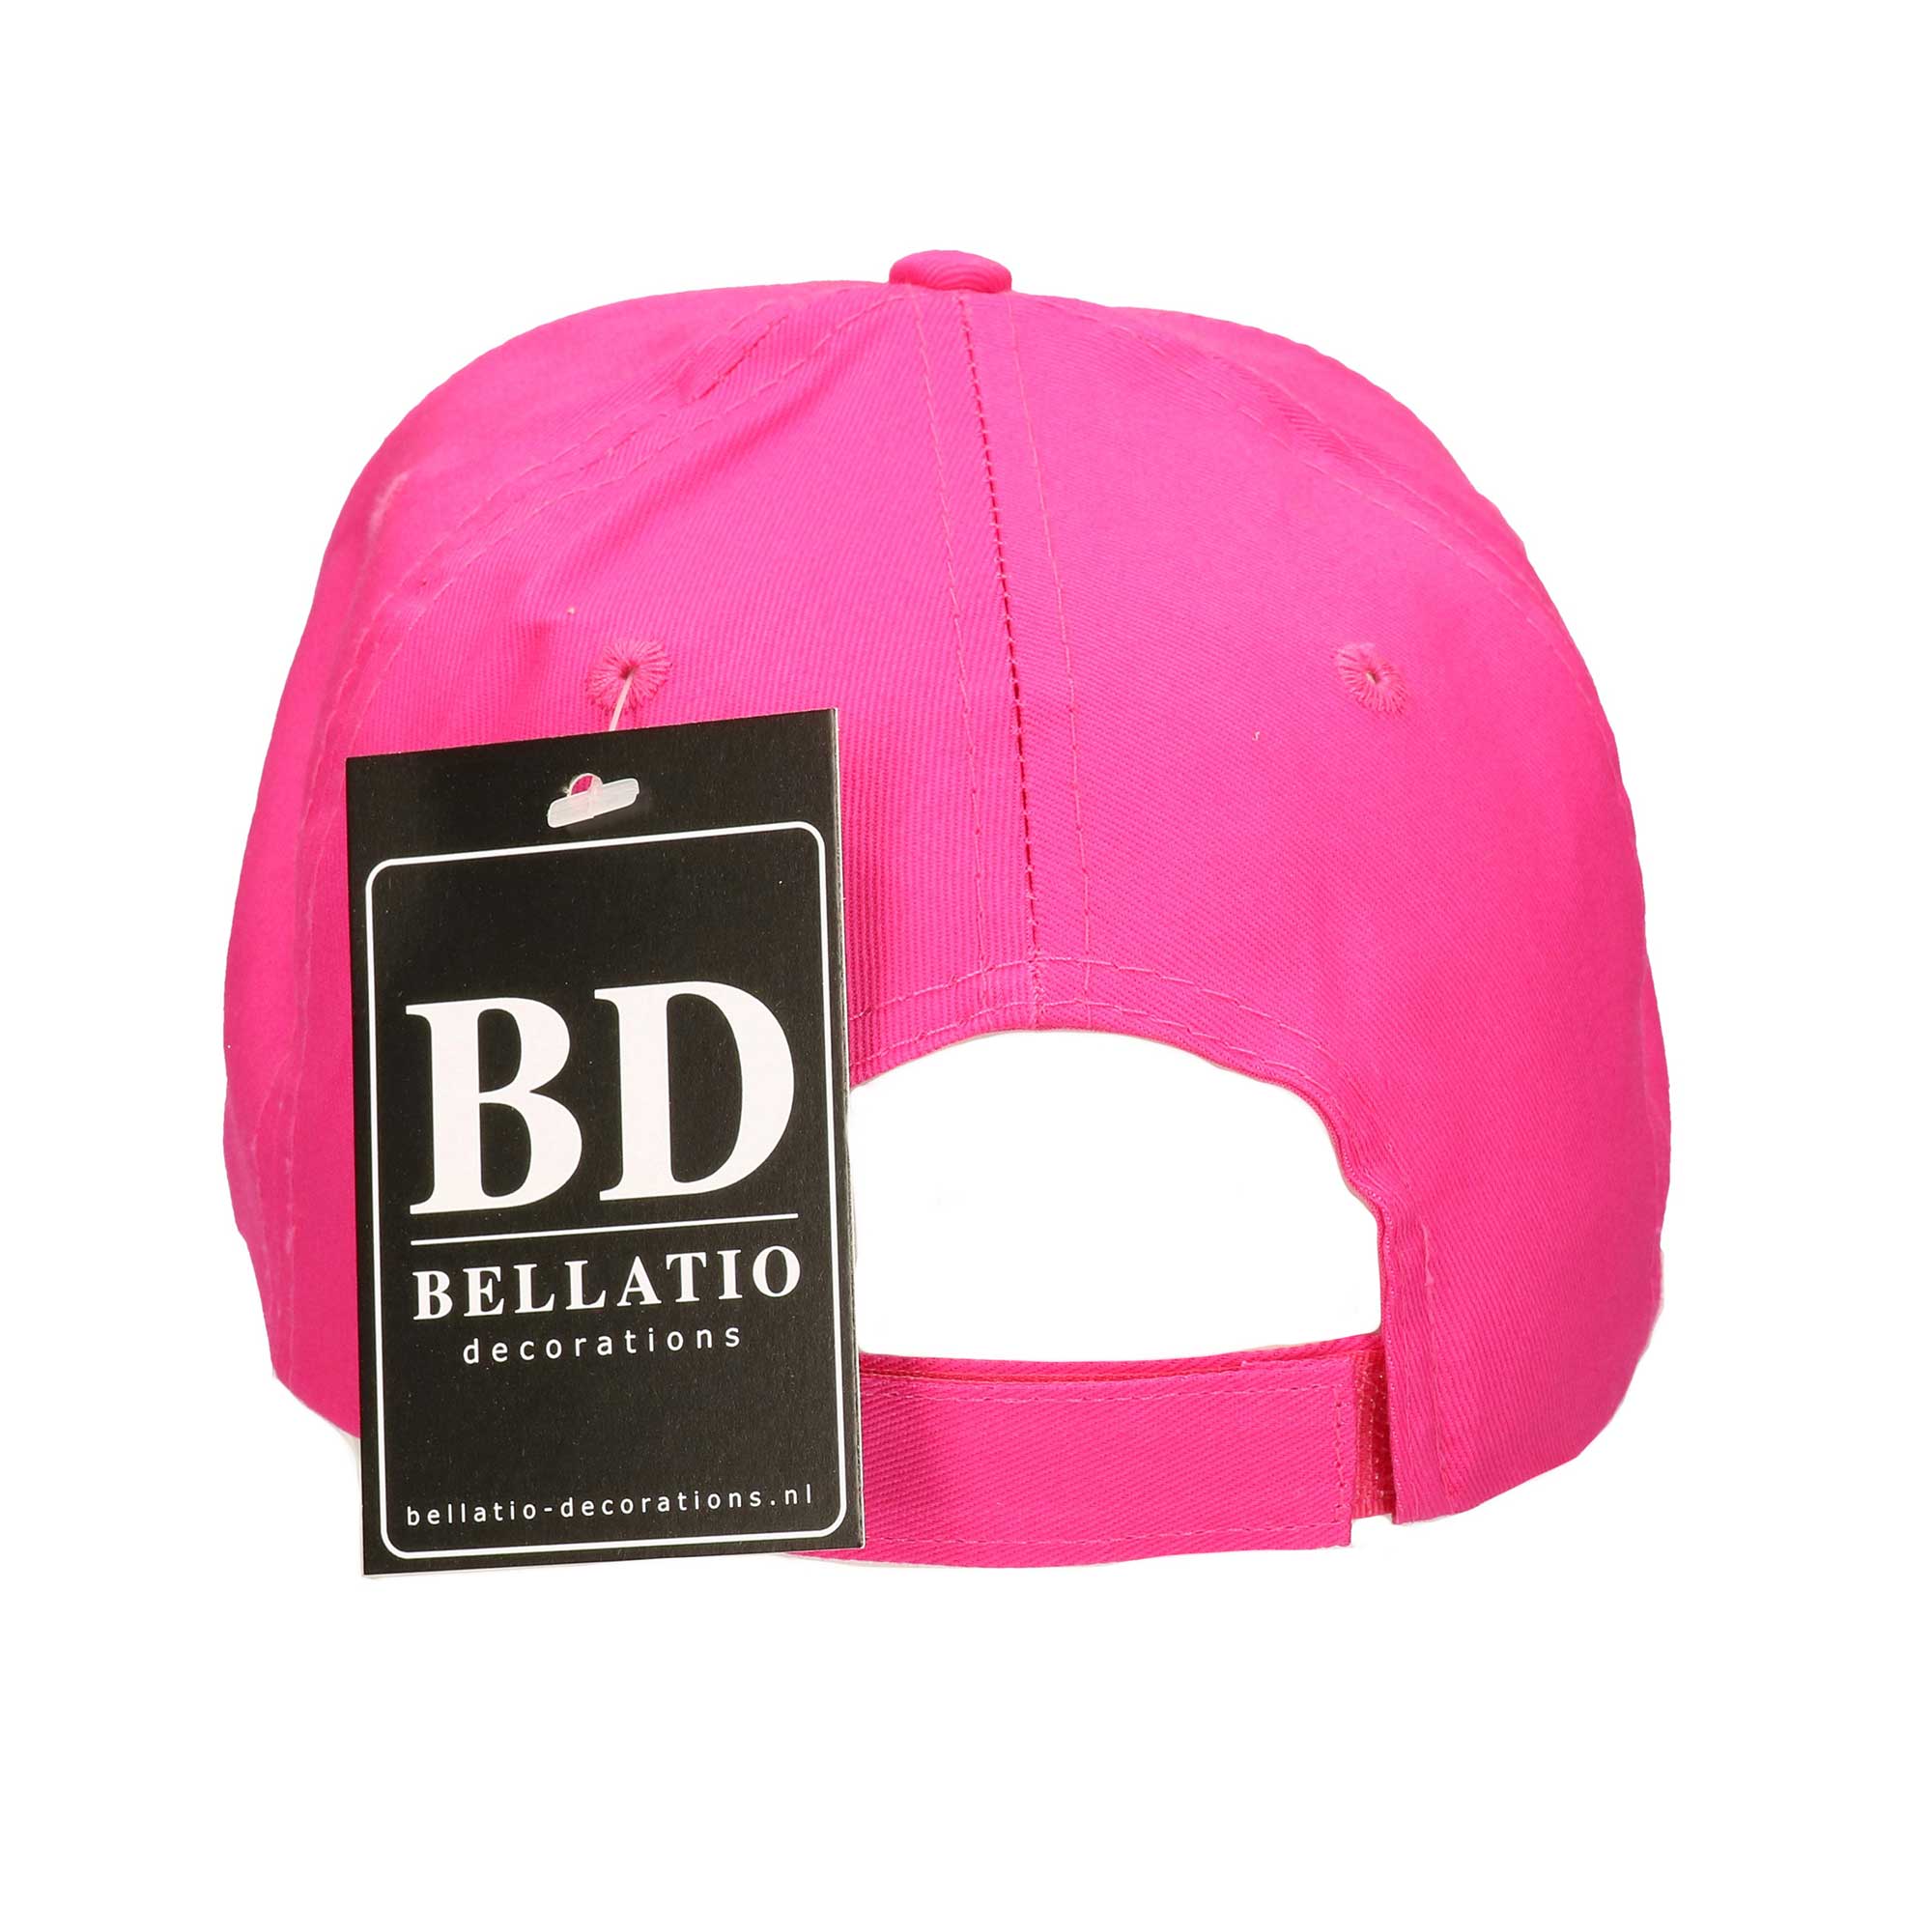 Super coach cap pink for adults